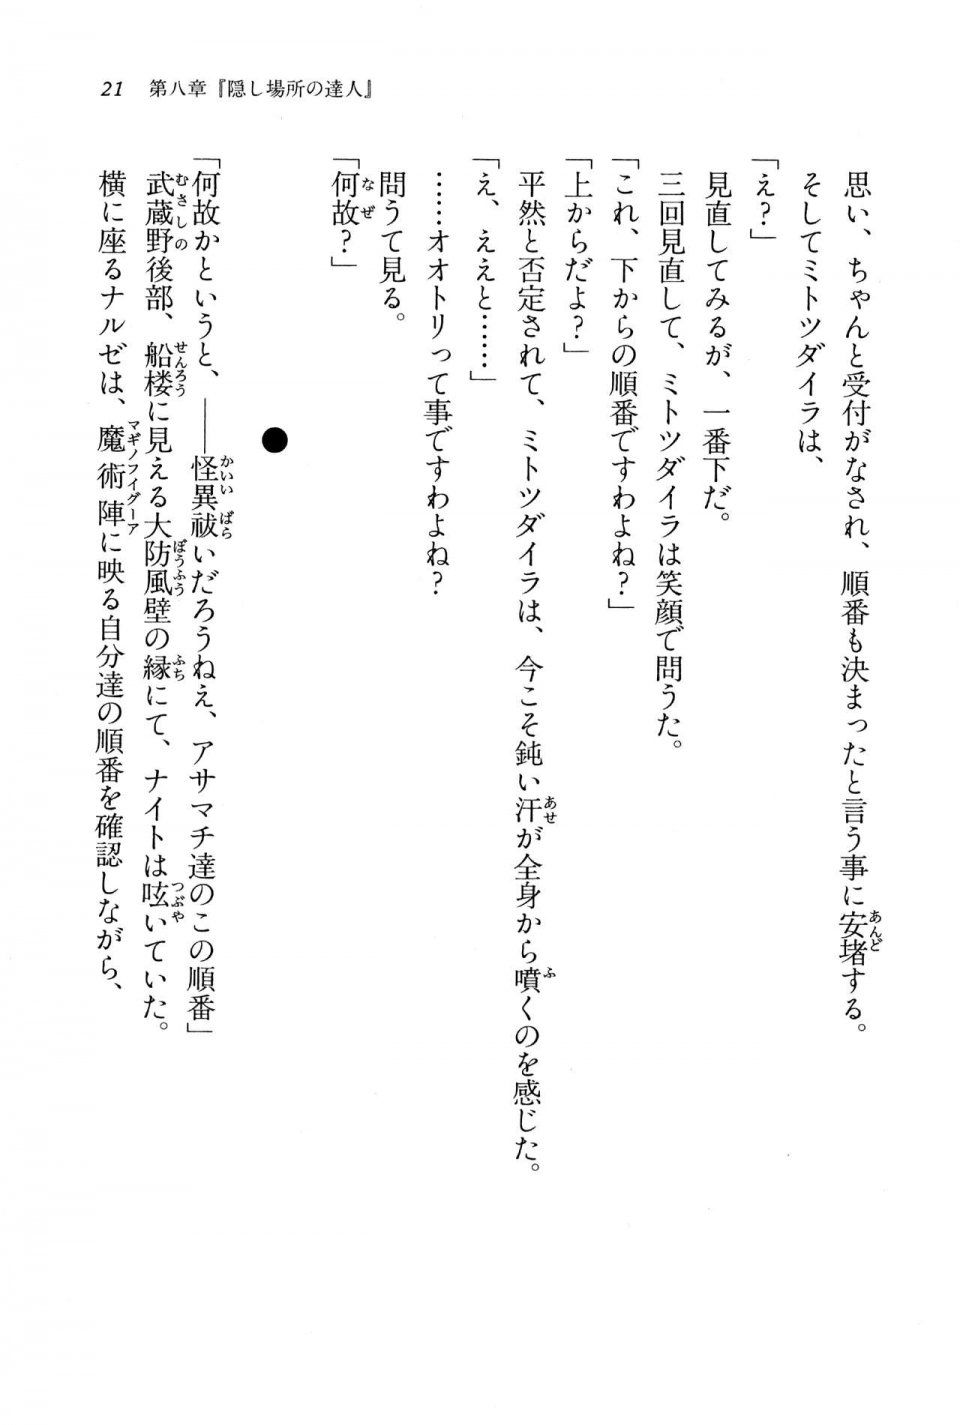 Kyoukai Senjou no Horizon BD Special Mininovel Vol 8(4B) - Photo #25